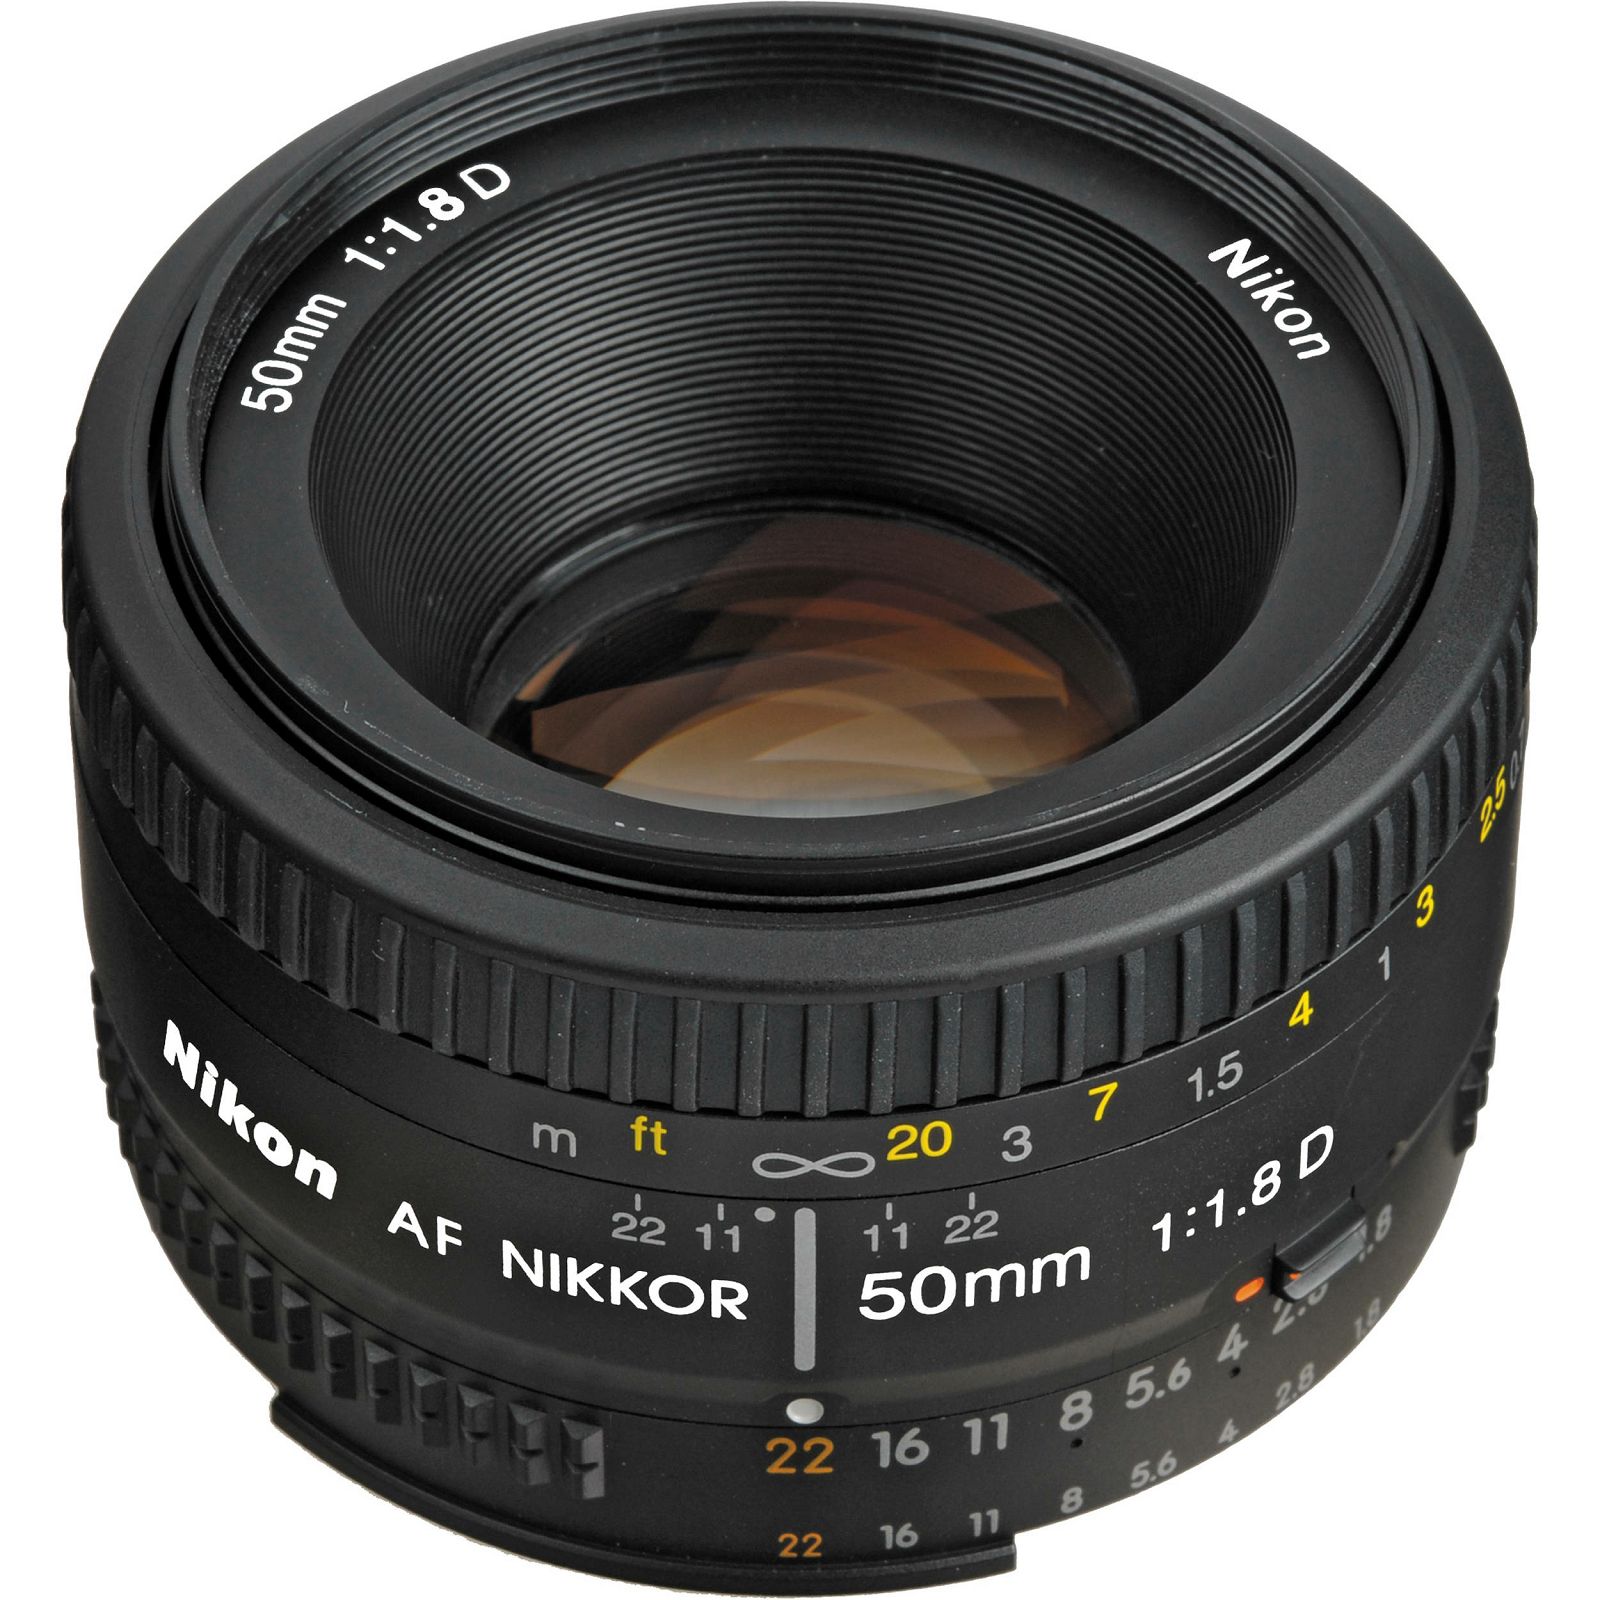 Nikon AF 50mm f/1.8D FX standardni objektiv fiksne žarišne duljine Nikkor auto focus prime lens 50 1.8 D (JAA013DA)